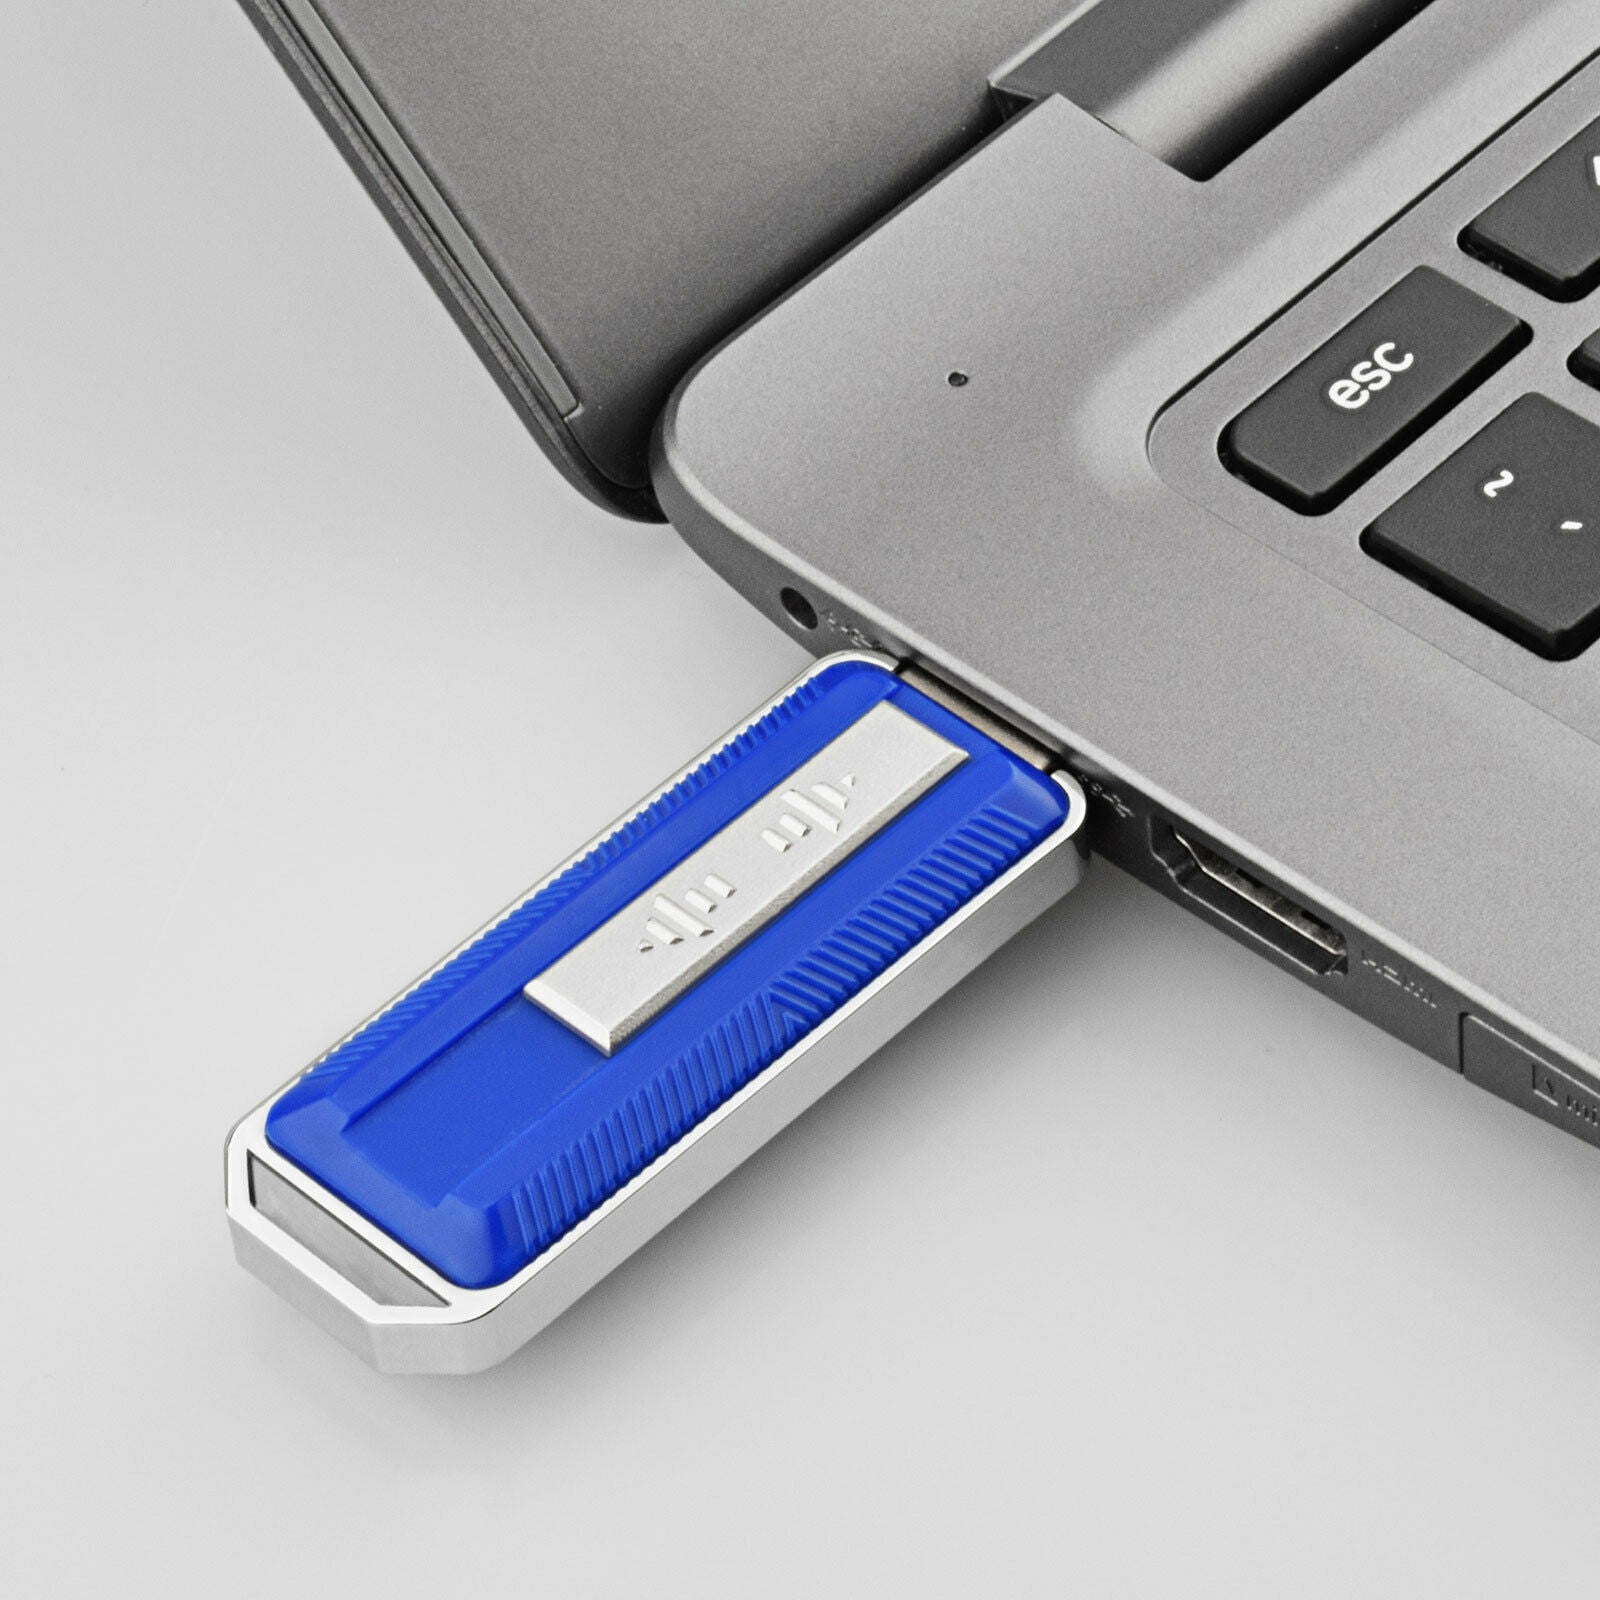 USB Flash Drive with Lanyard Hole Push-Pull Thumb Drive Plug-Play Jump Drive